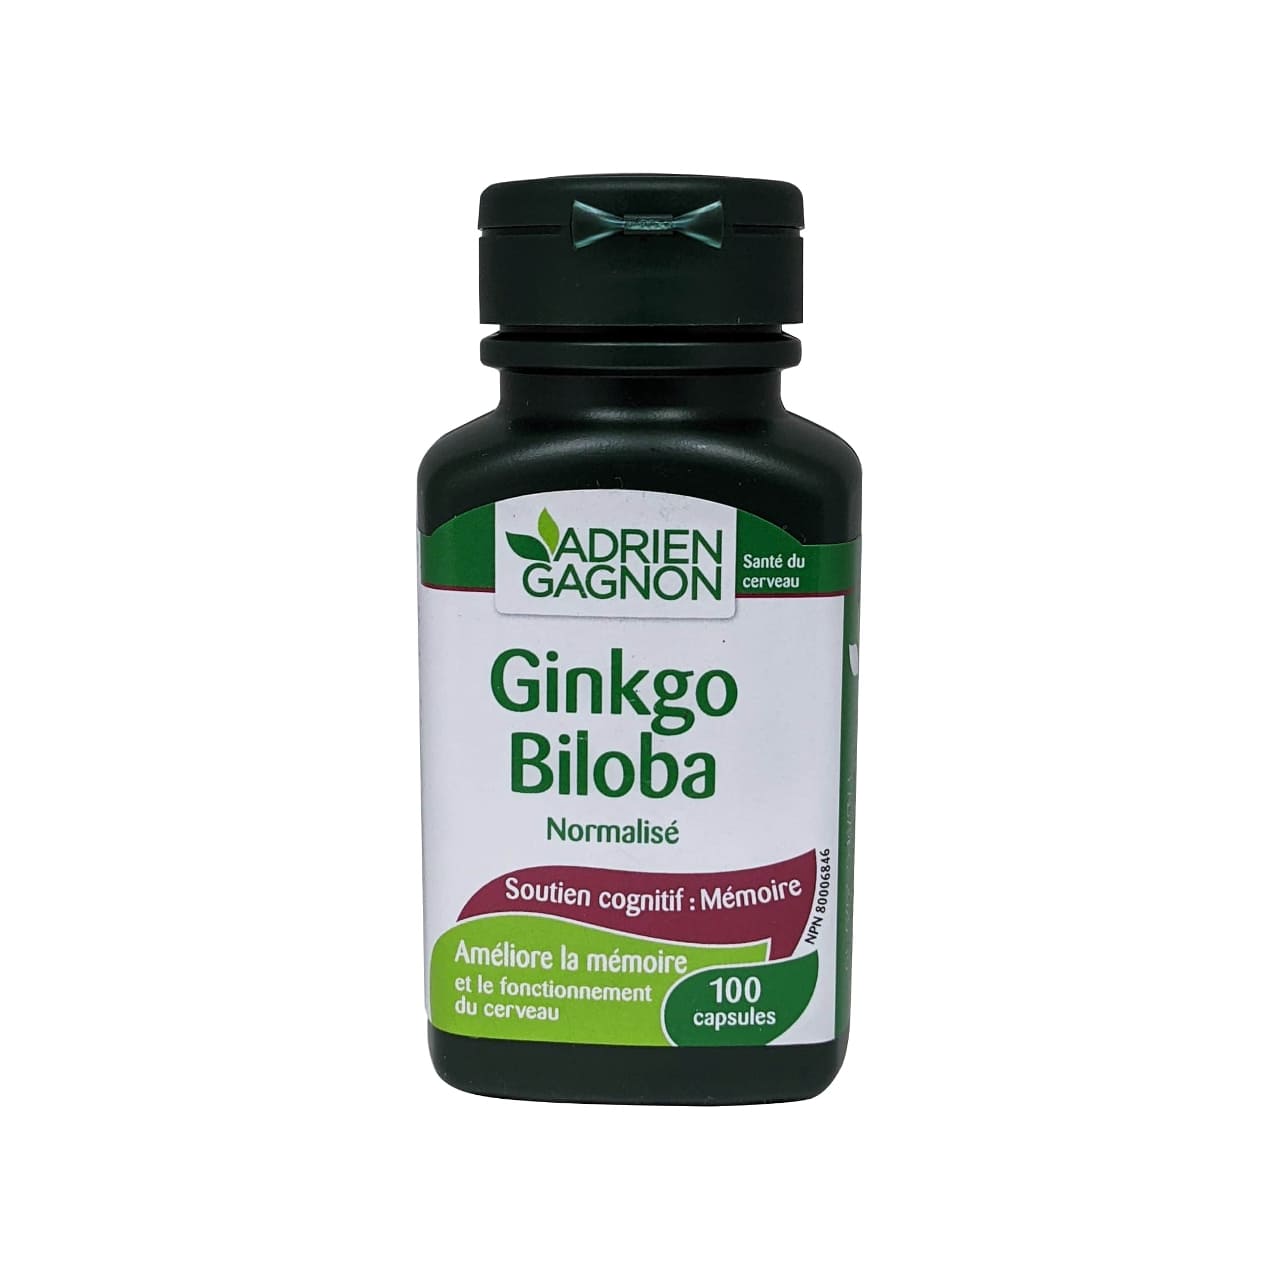 French product label for Adrien Gagnon Ginkgo Biloba.